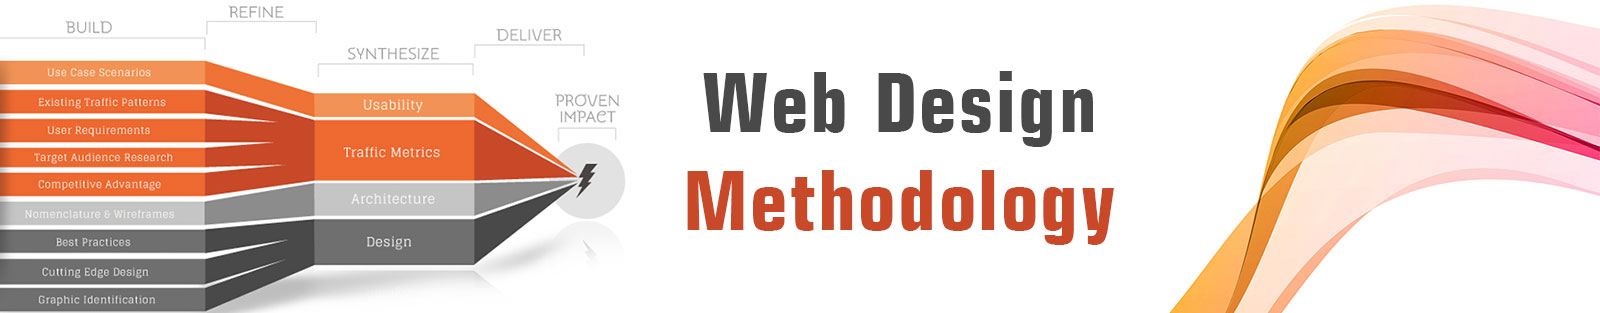 Web Design Methodology